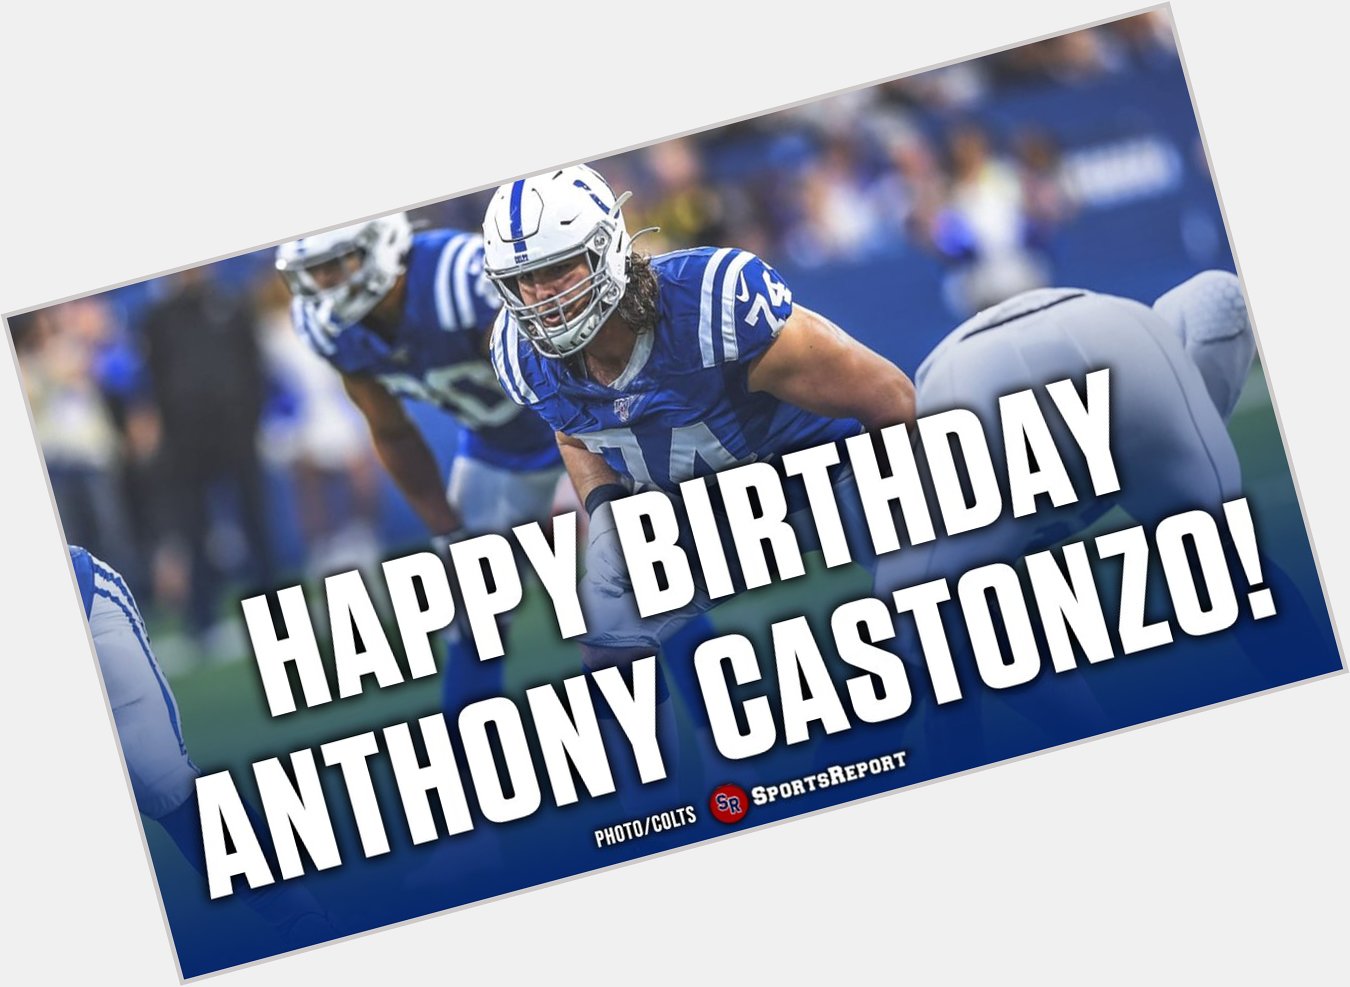  Fans, let\s wish Anthony Castonzo a Happy Birthday! GO COLTS!! 